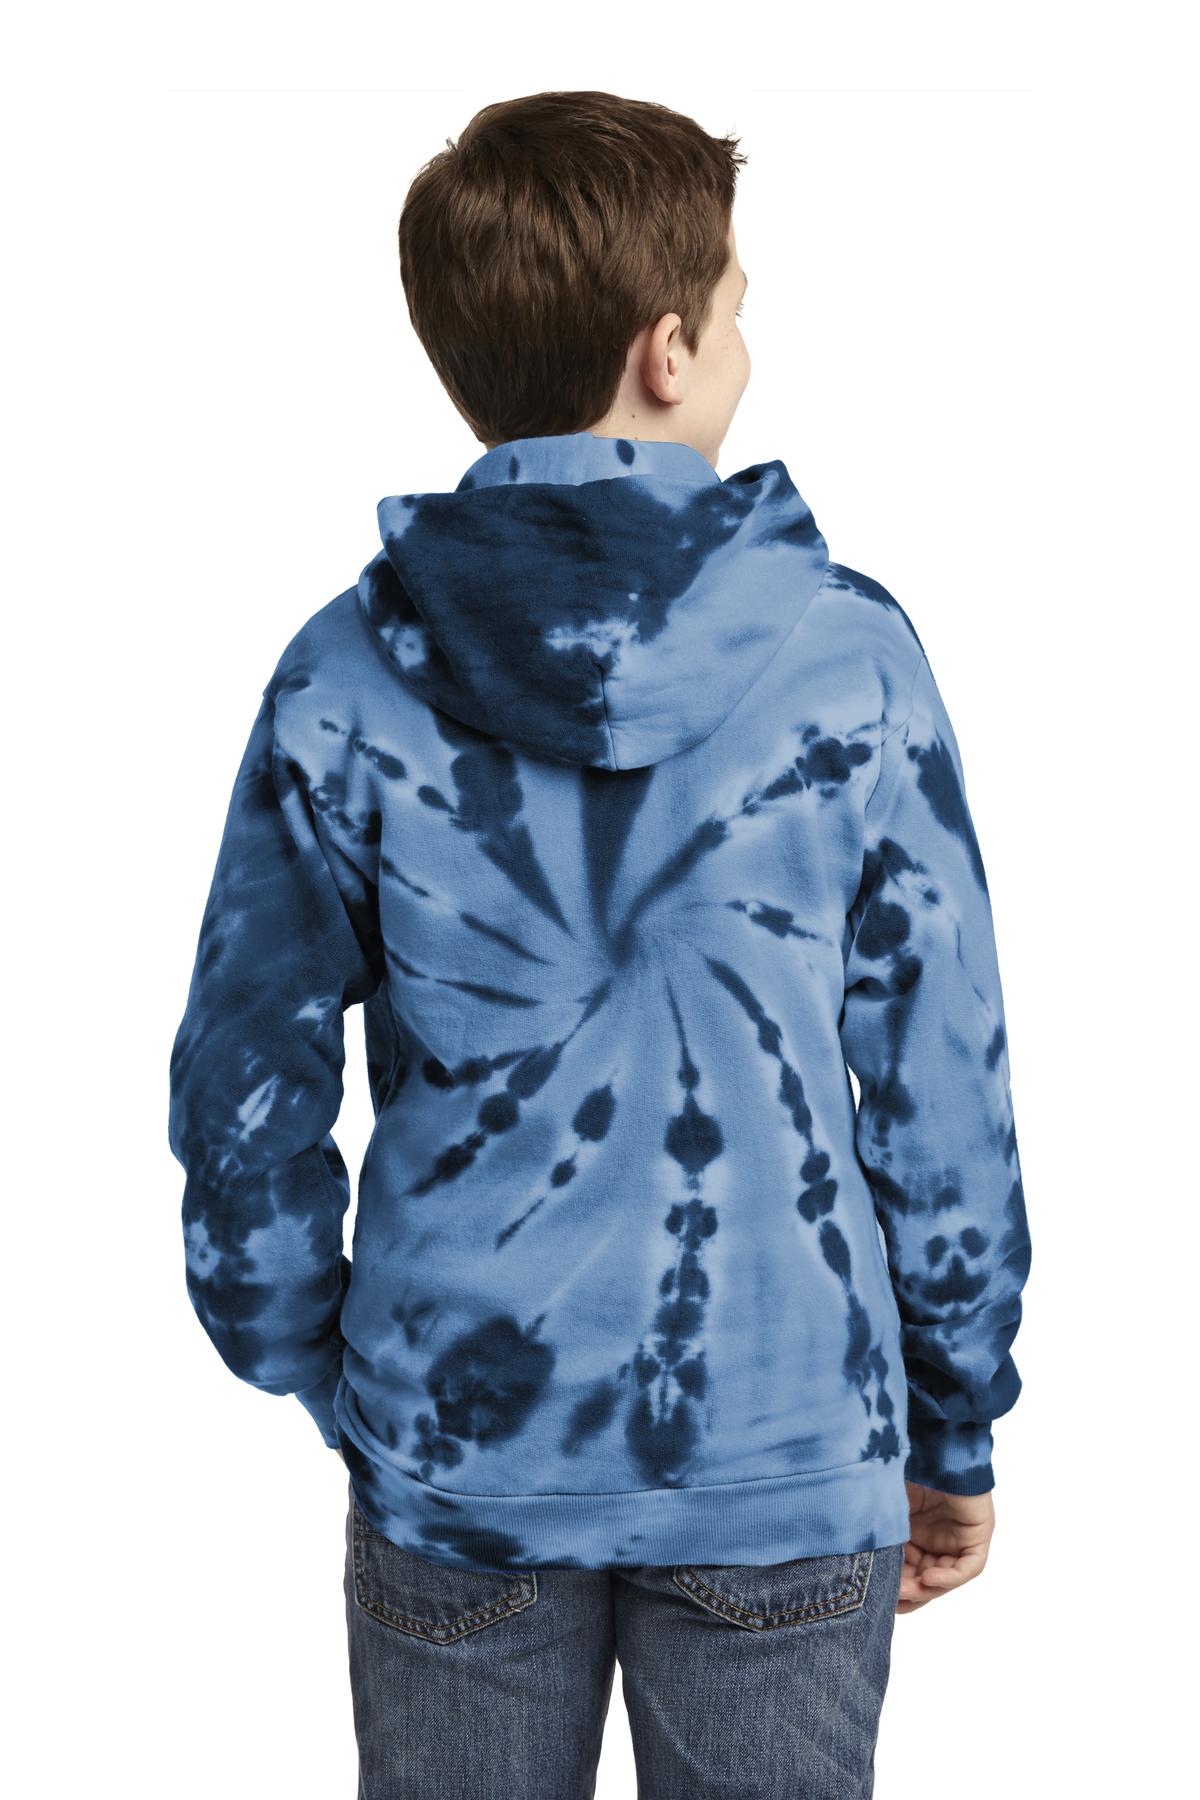 Port & Company Youth Tie-Dye Pullover Hooded Sweatshirt. PC146Y